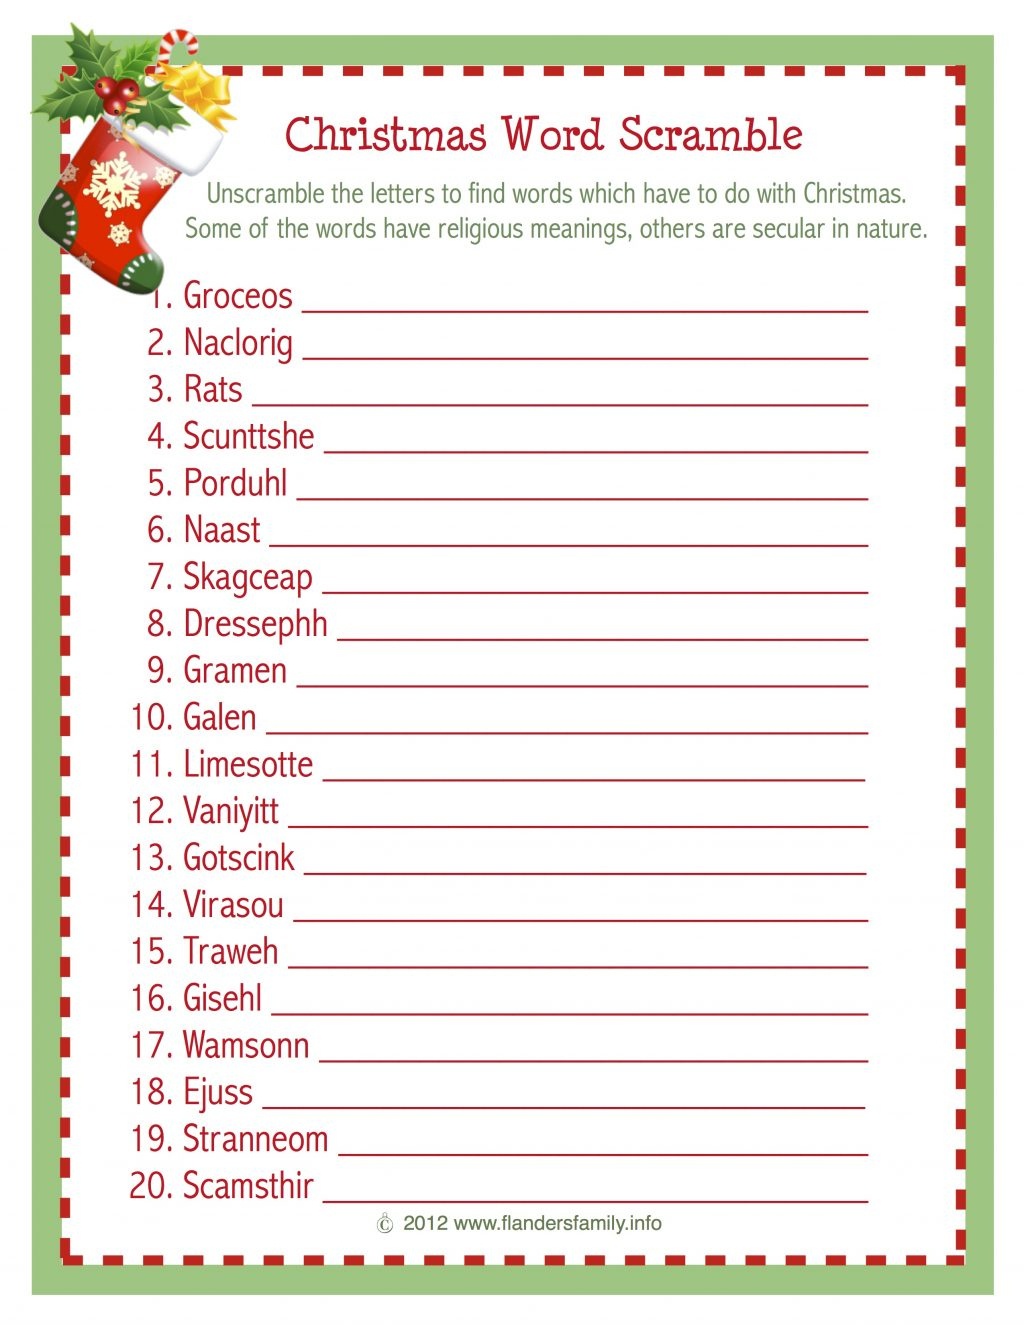 Christmas Word Scramble (Free Printable) - Flanders Family Homelife - Free Printable Christmas Word Scramble With Answers